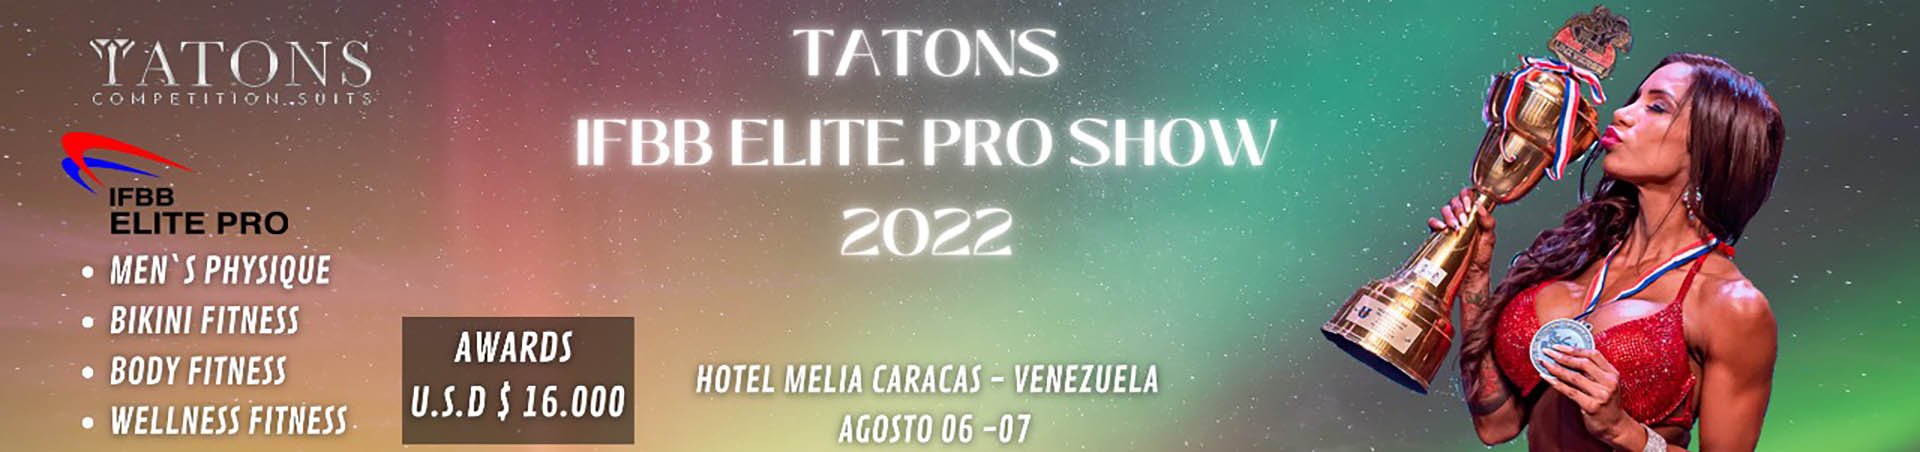 TATONS IFBB ELITE PRO SHOW 2022 1